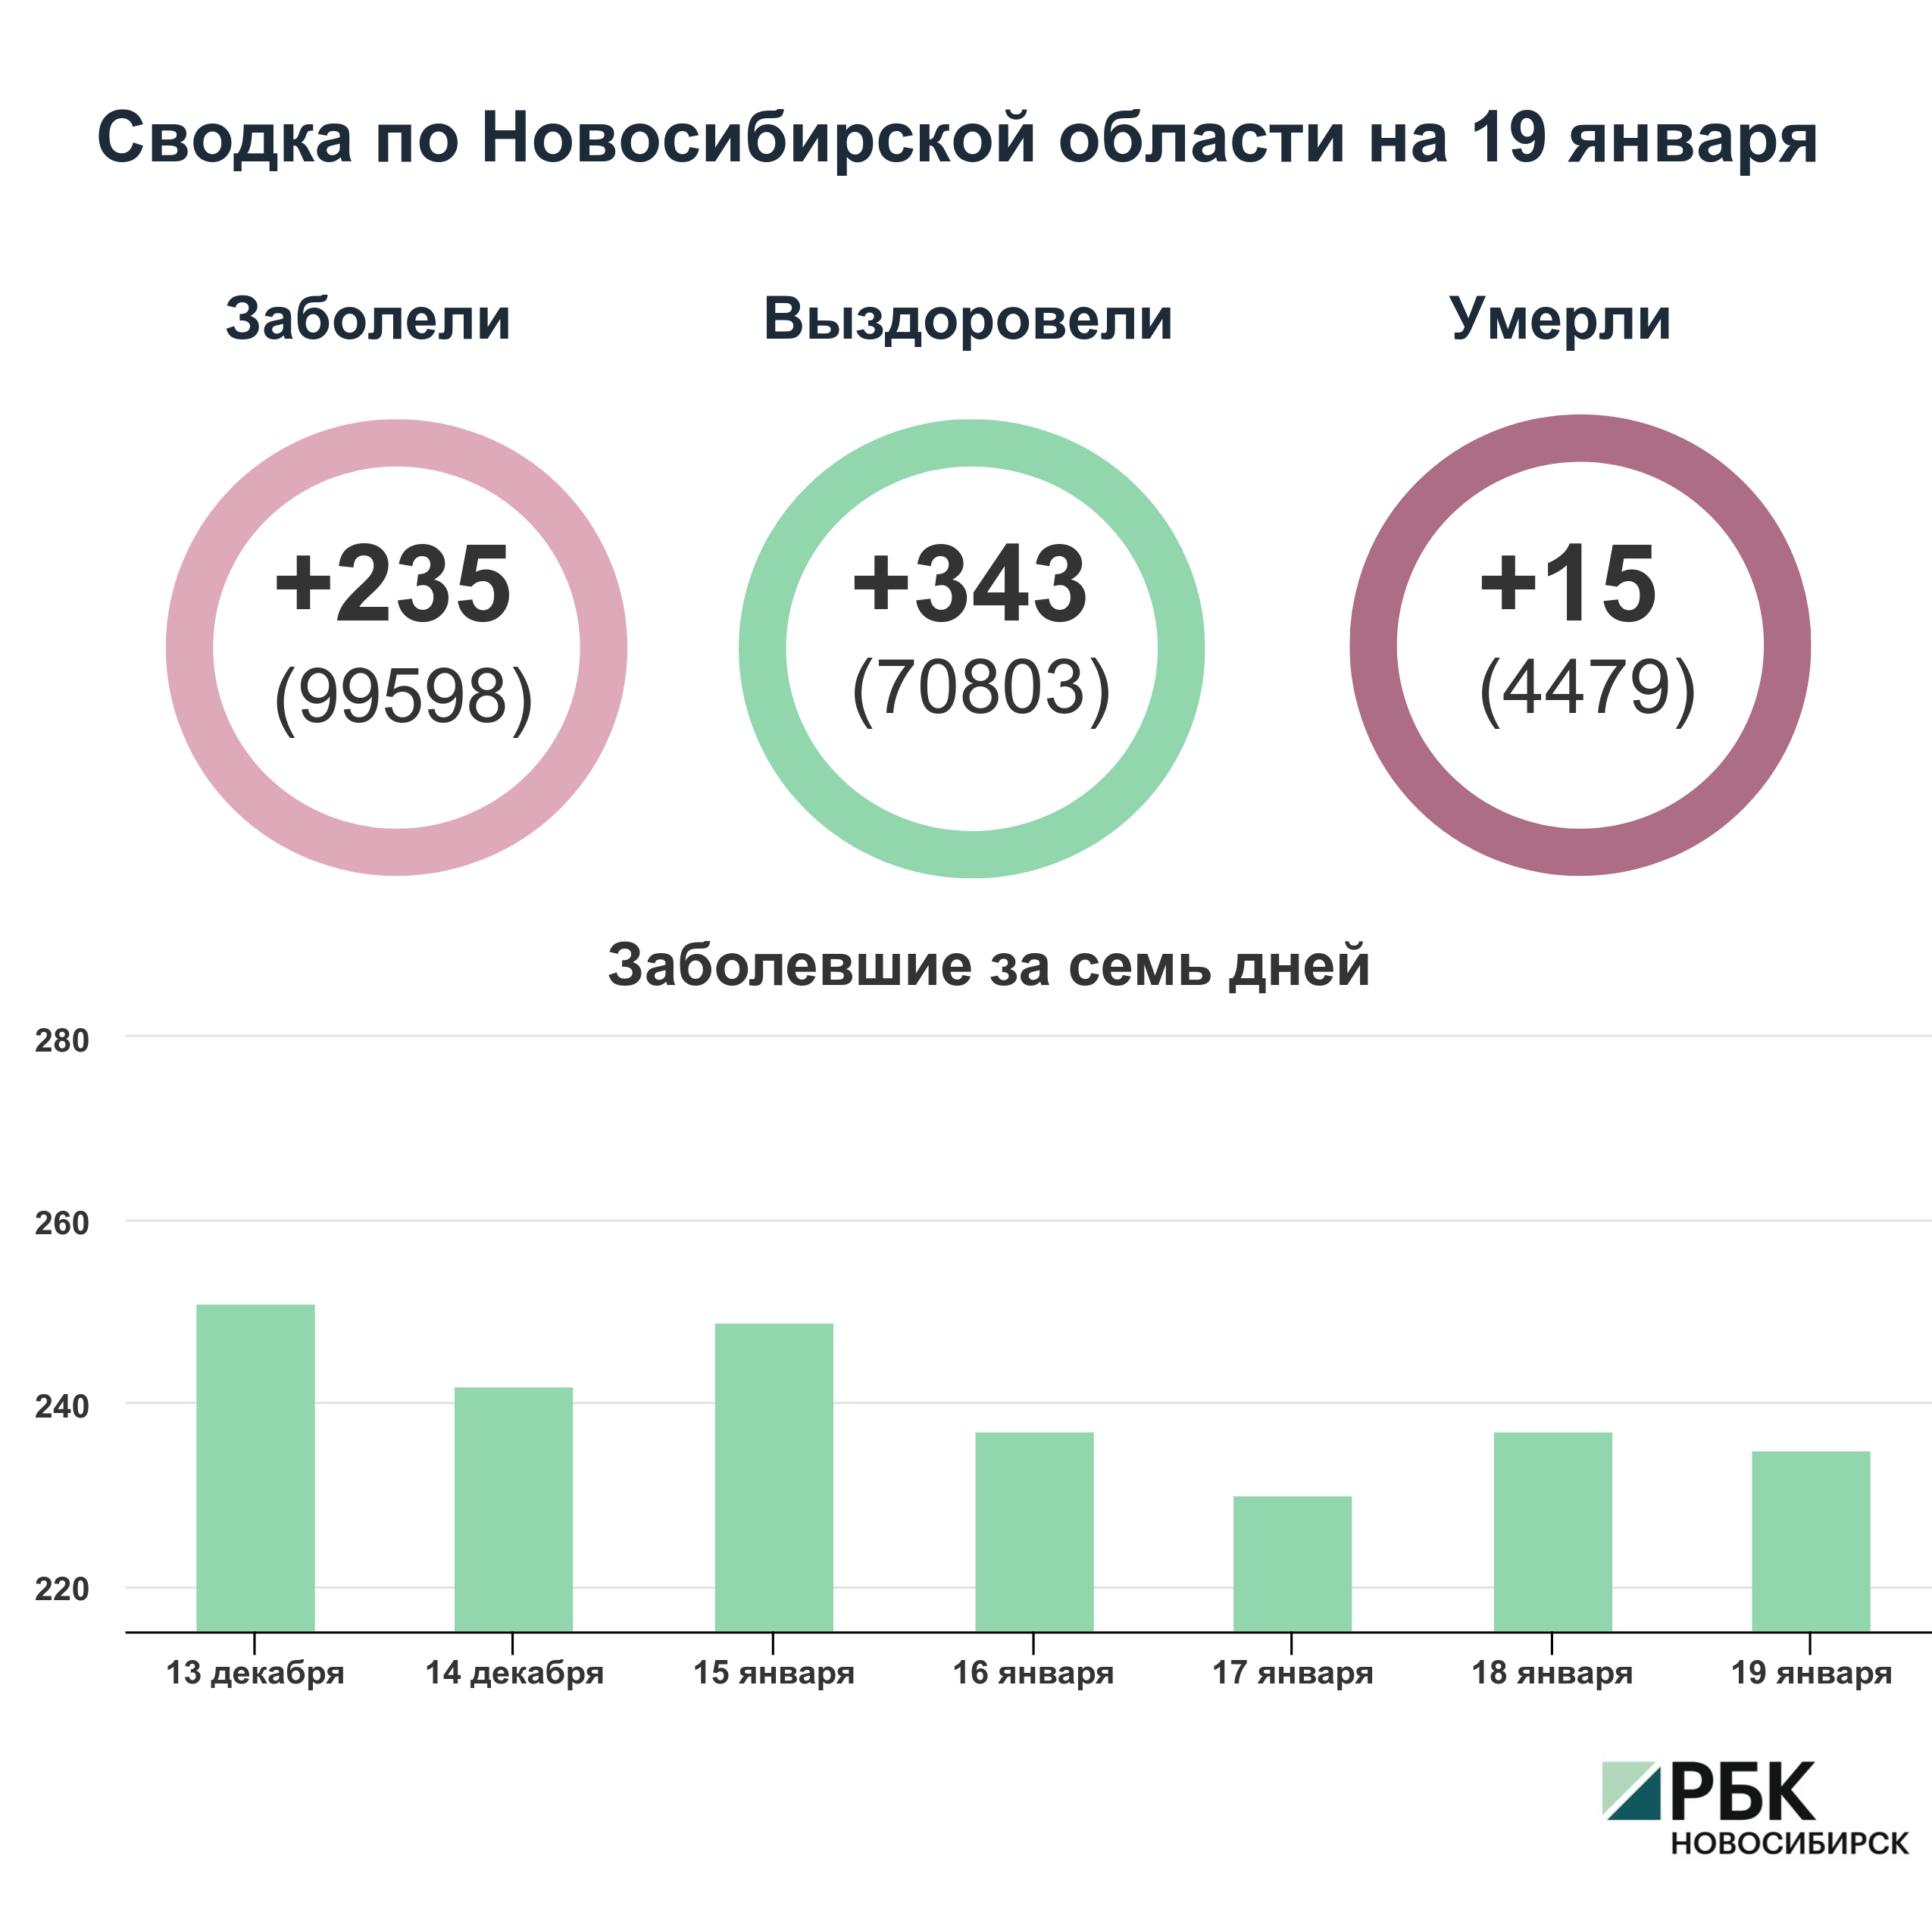 Коронавирус в Новосибирске: сводка на 19 января